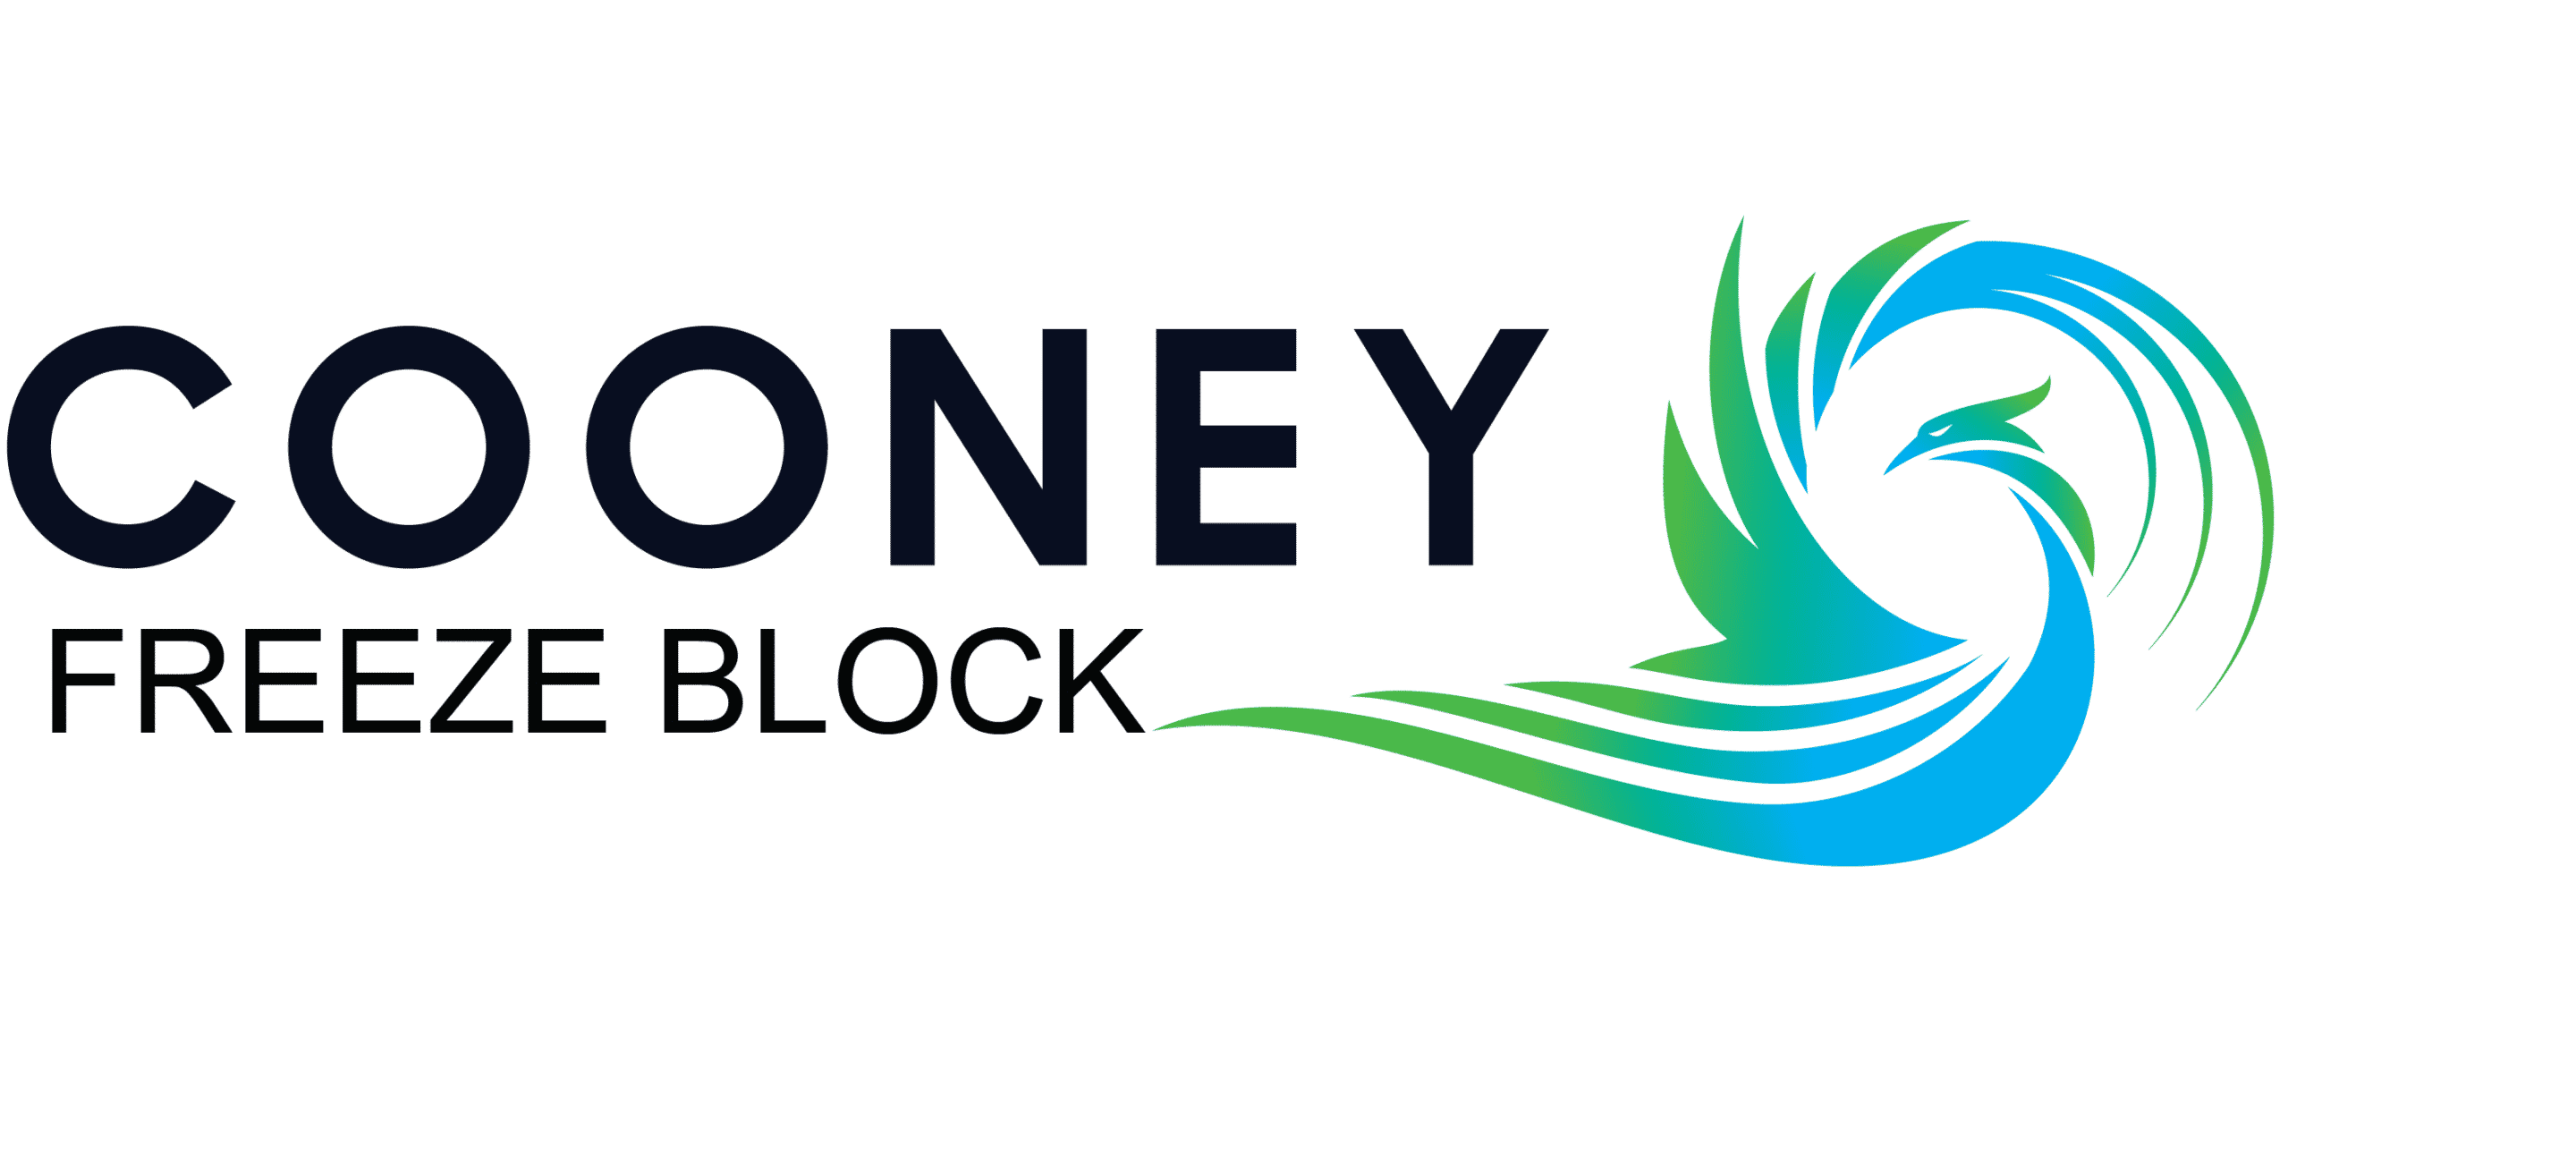 Cooney Freeze Block Logo